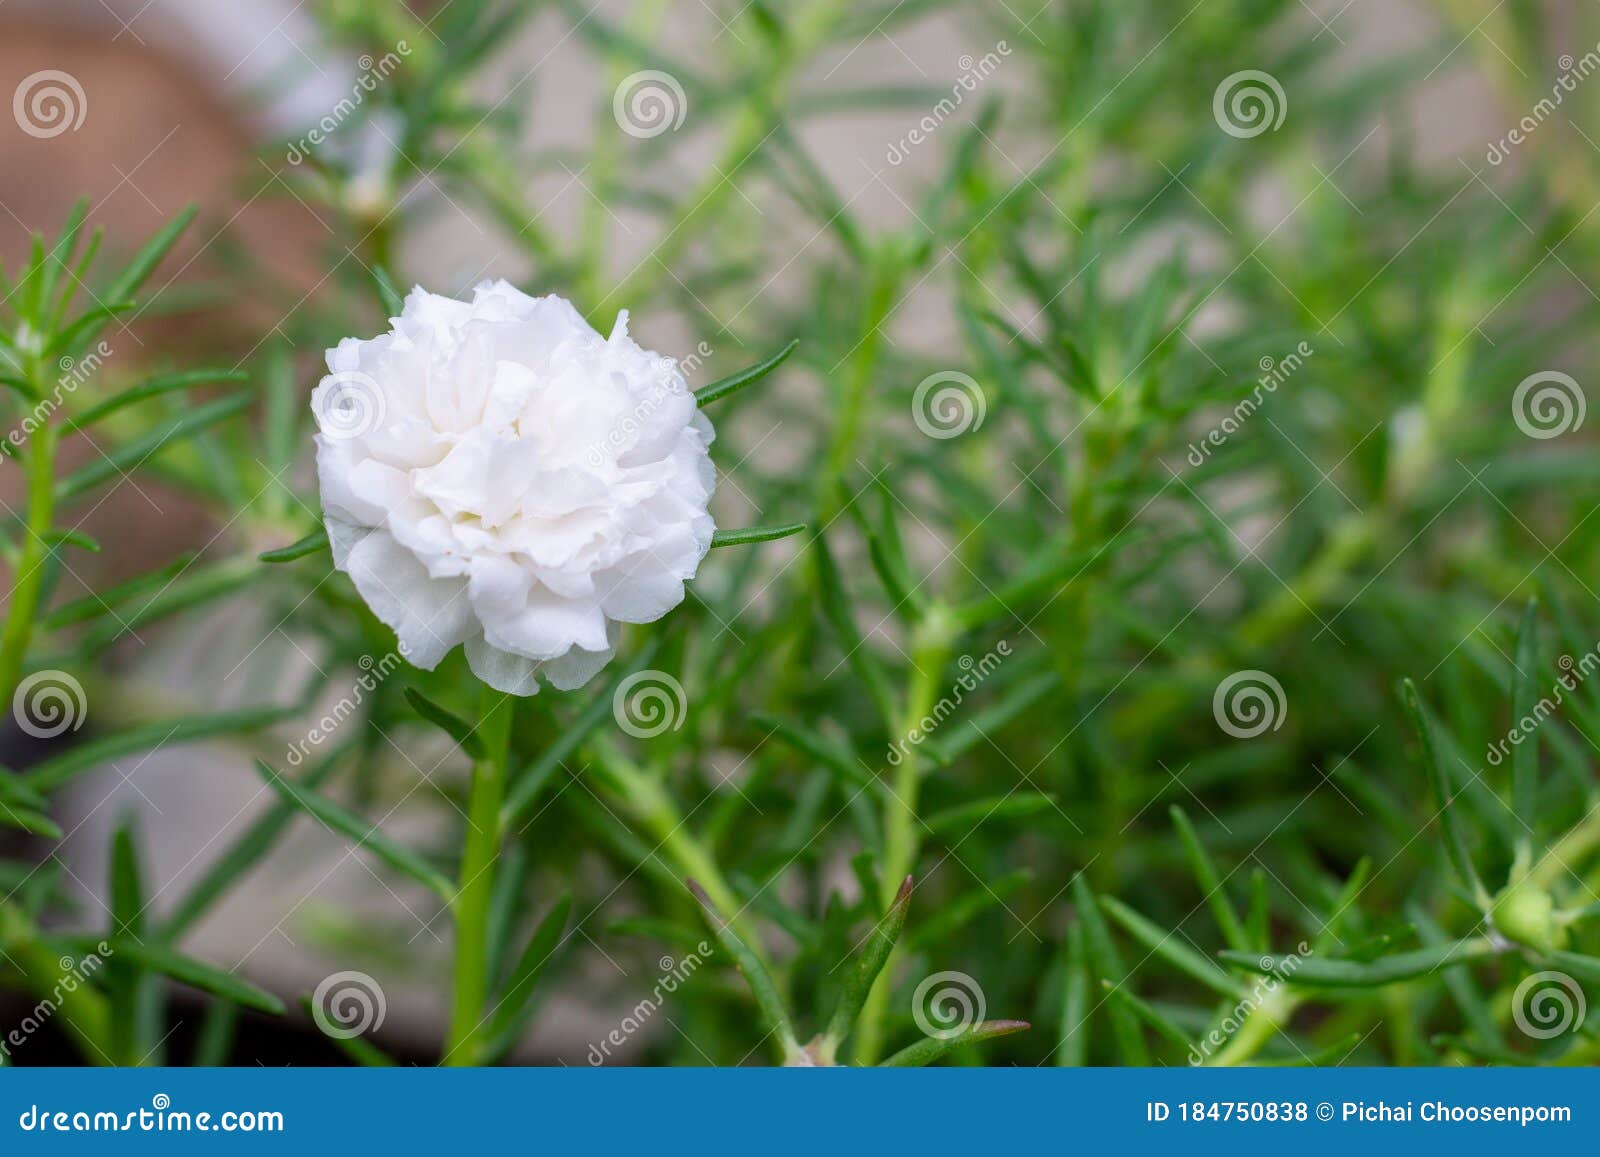 white common purslane(verdolaga, pigweed, little hogweed, pusley